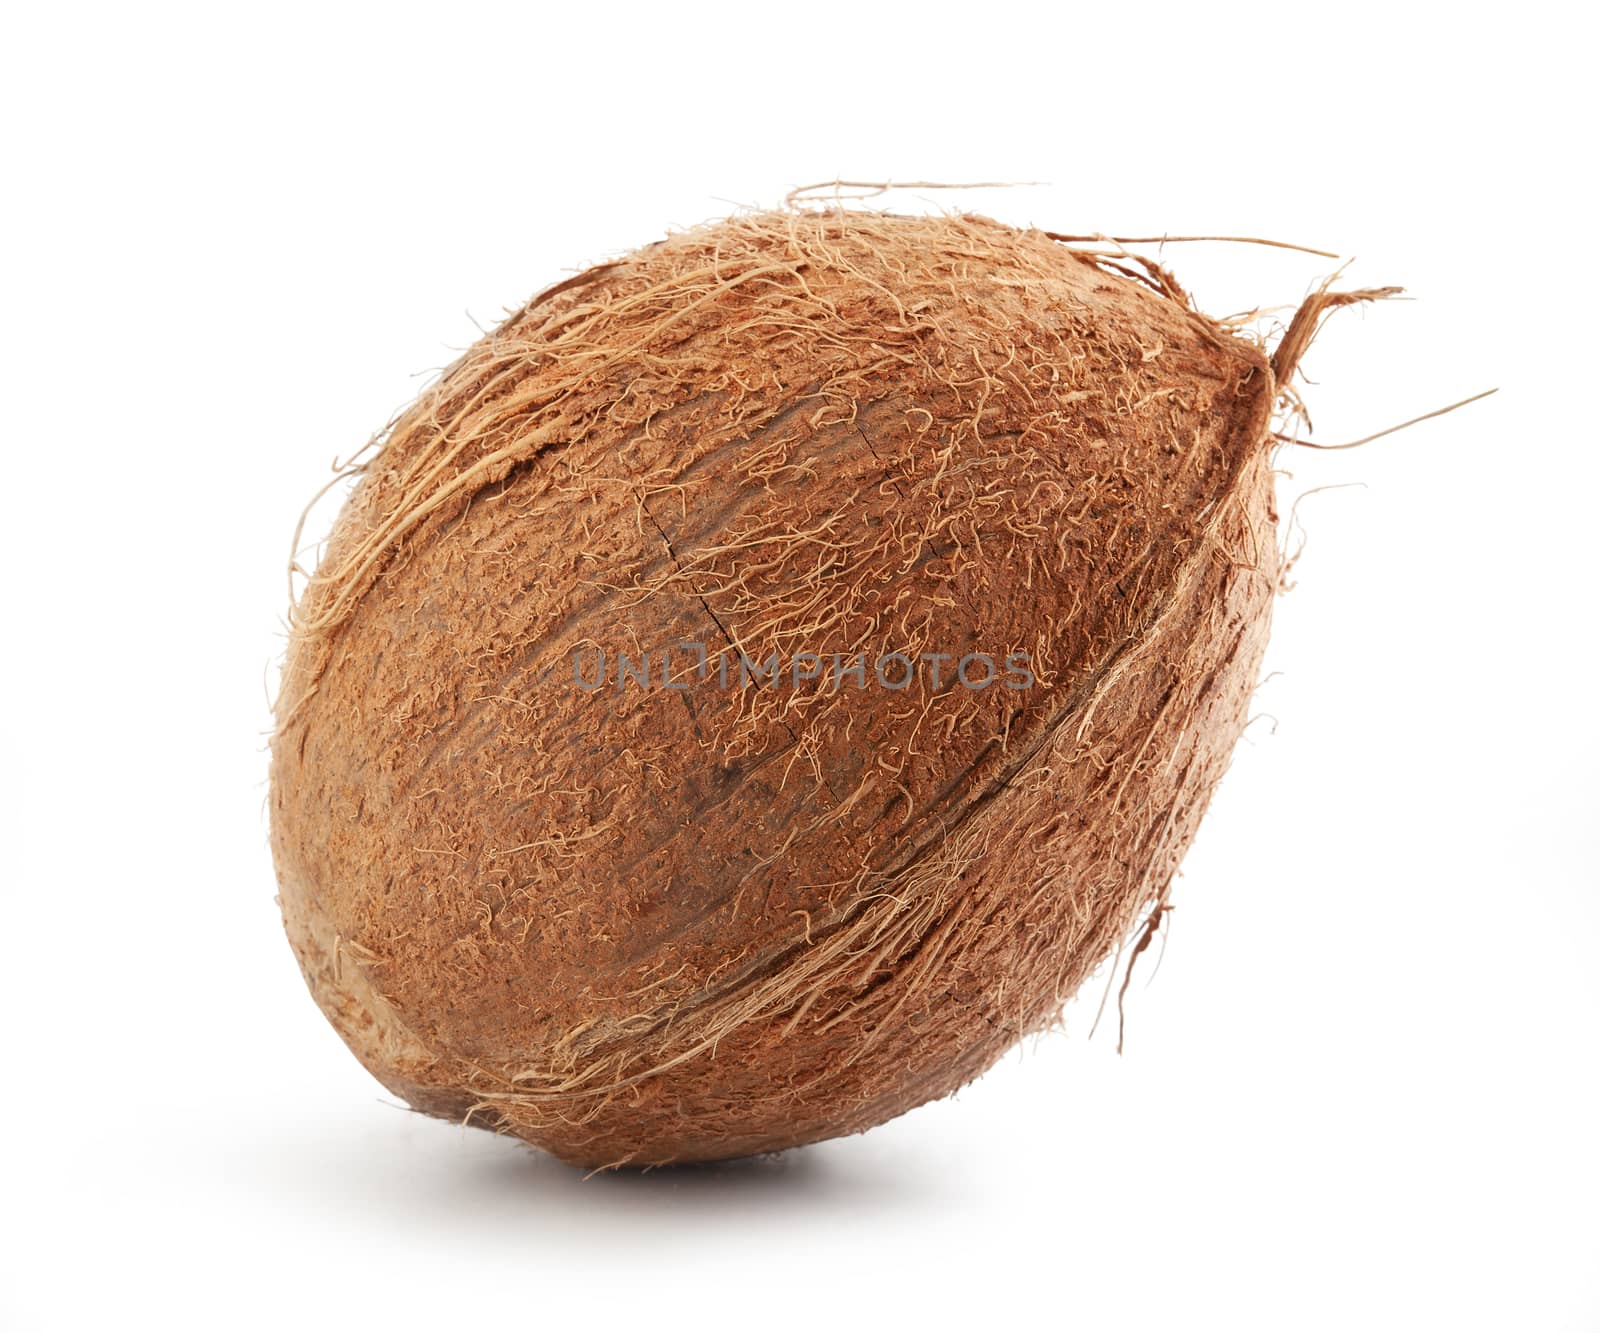 Isolated coconut by Angorius